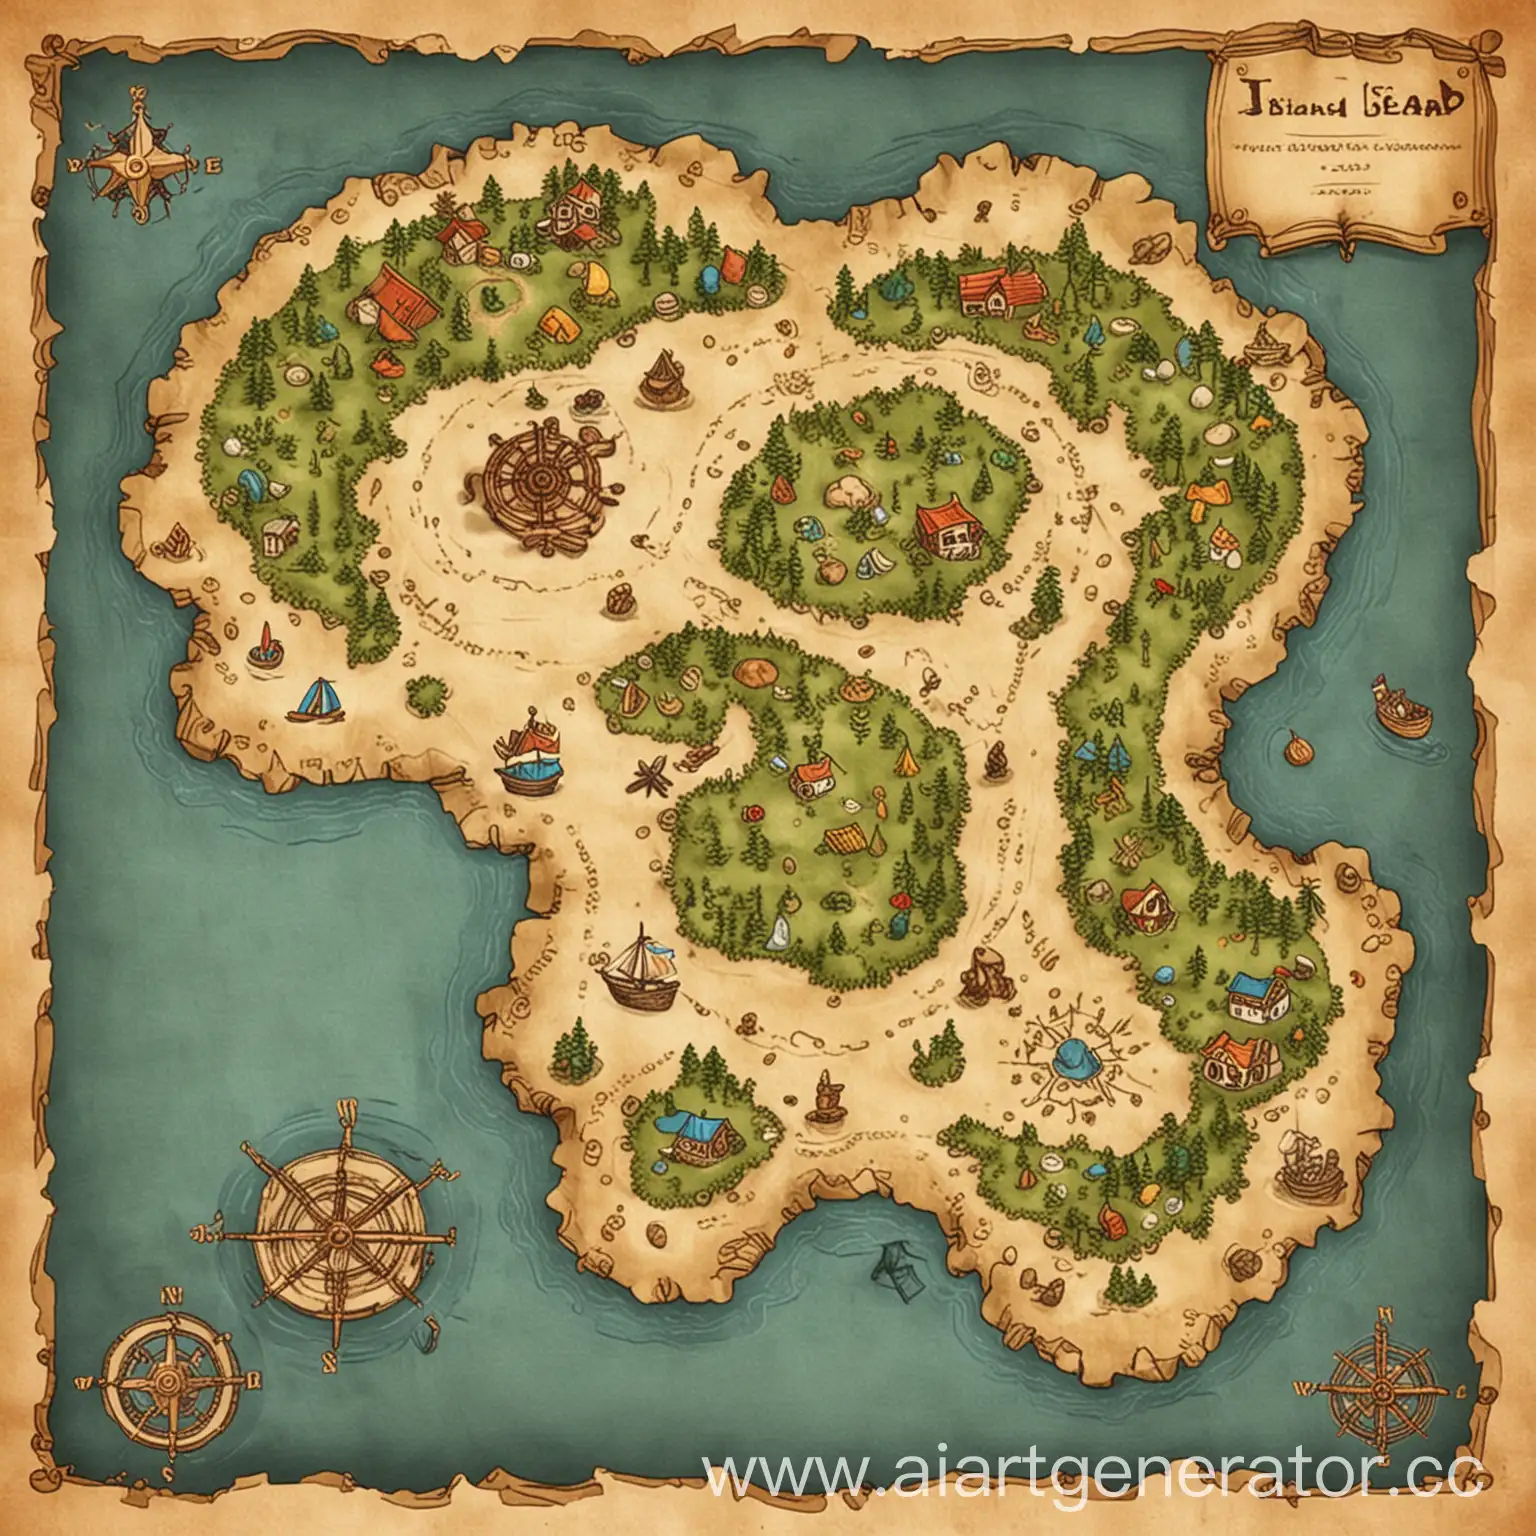 Illustrated-Island-Treasure-Map-Surrounding-a-Mystical-Sea